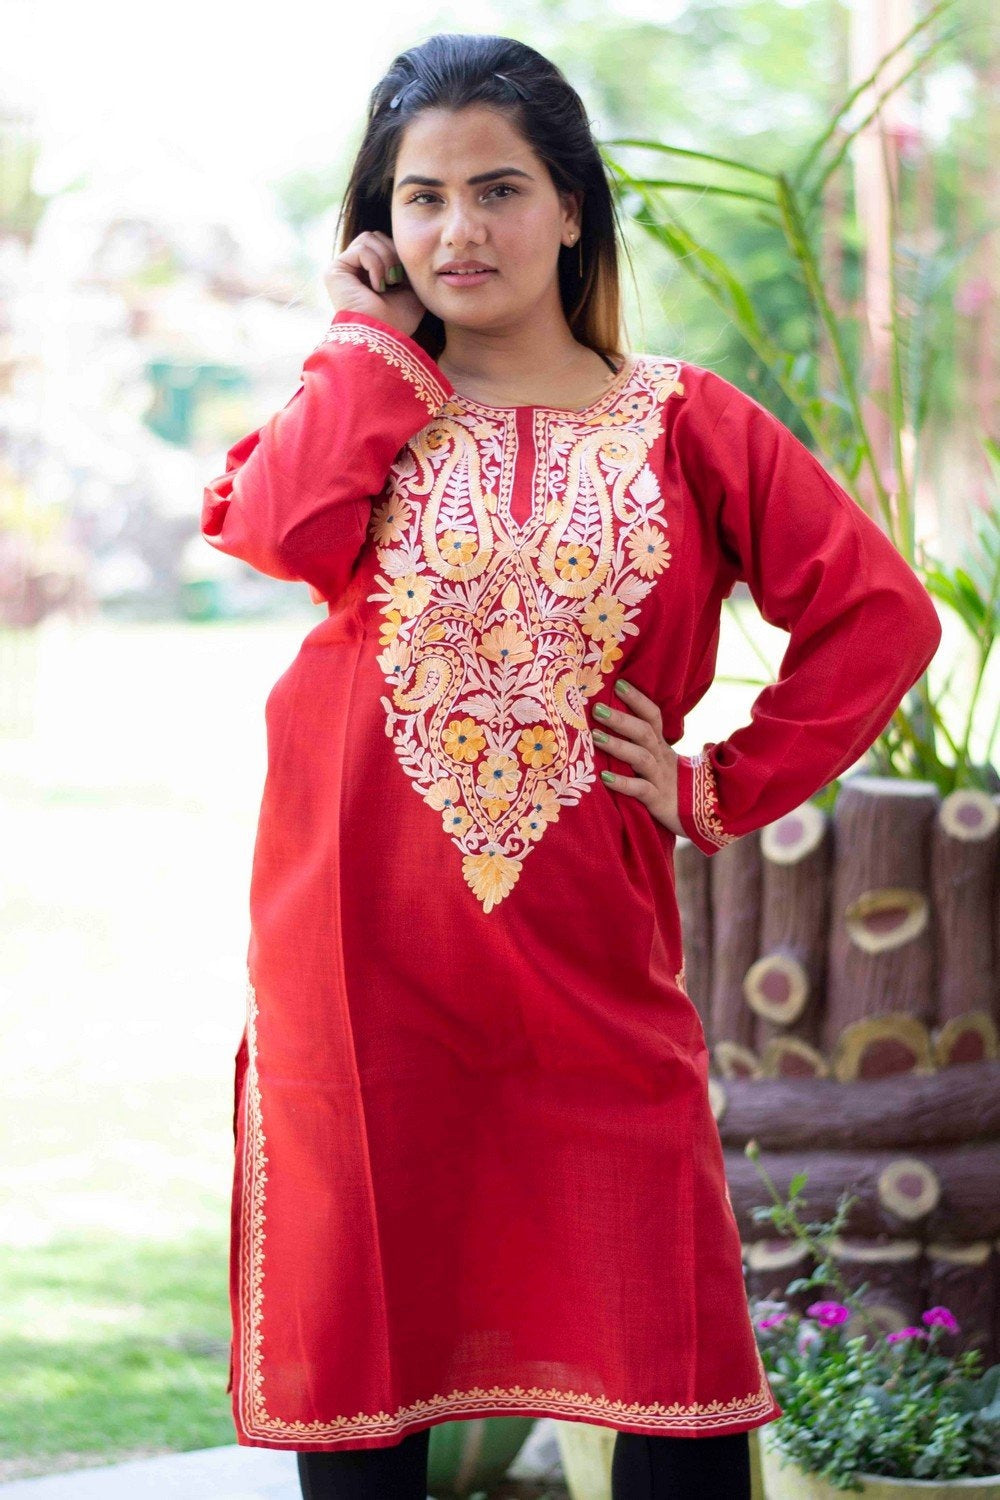 Buy jprcraft Rajasthani Design Red Elegant Rayon Kurti at Amazonin